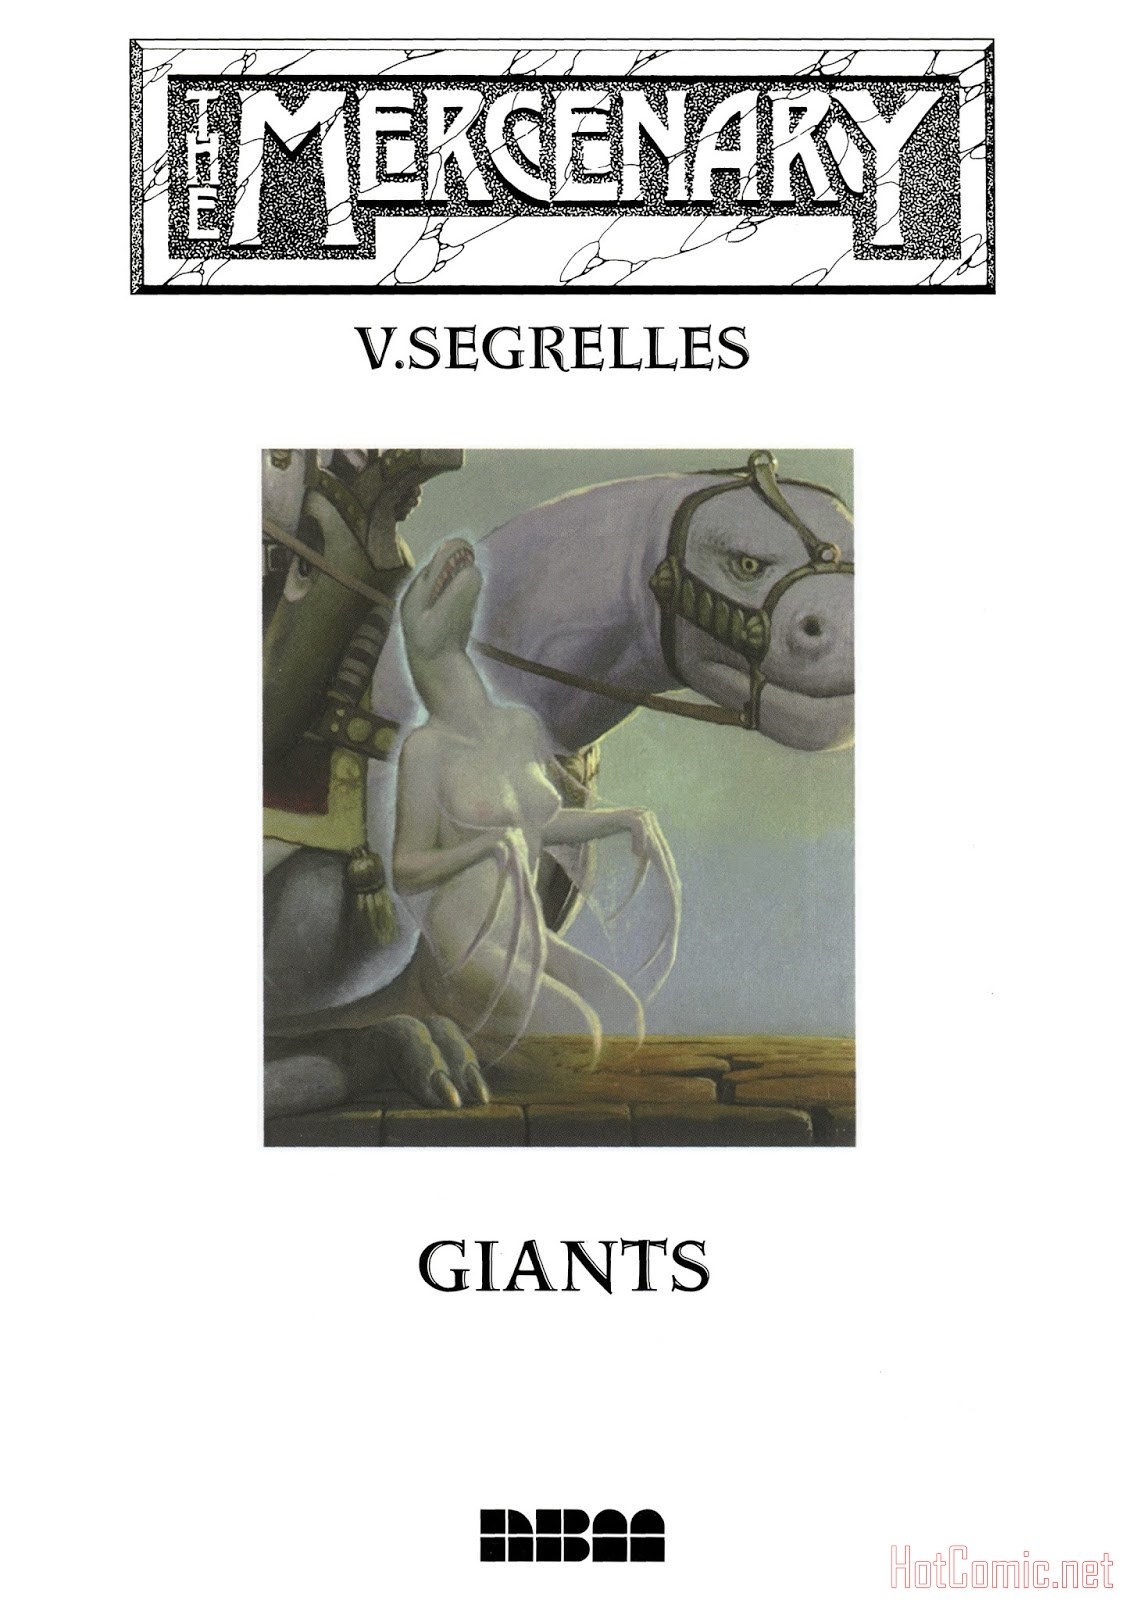 [Vicente Segrellés] The Mercenary 9 - Giants [English] 1